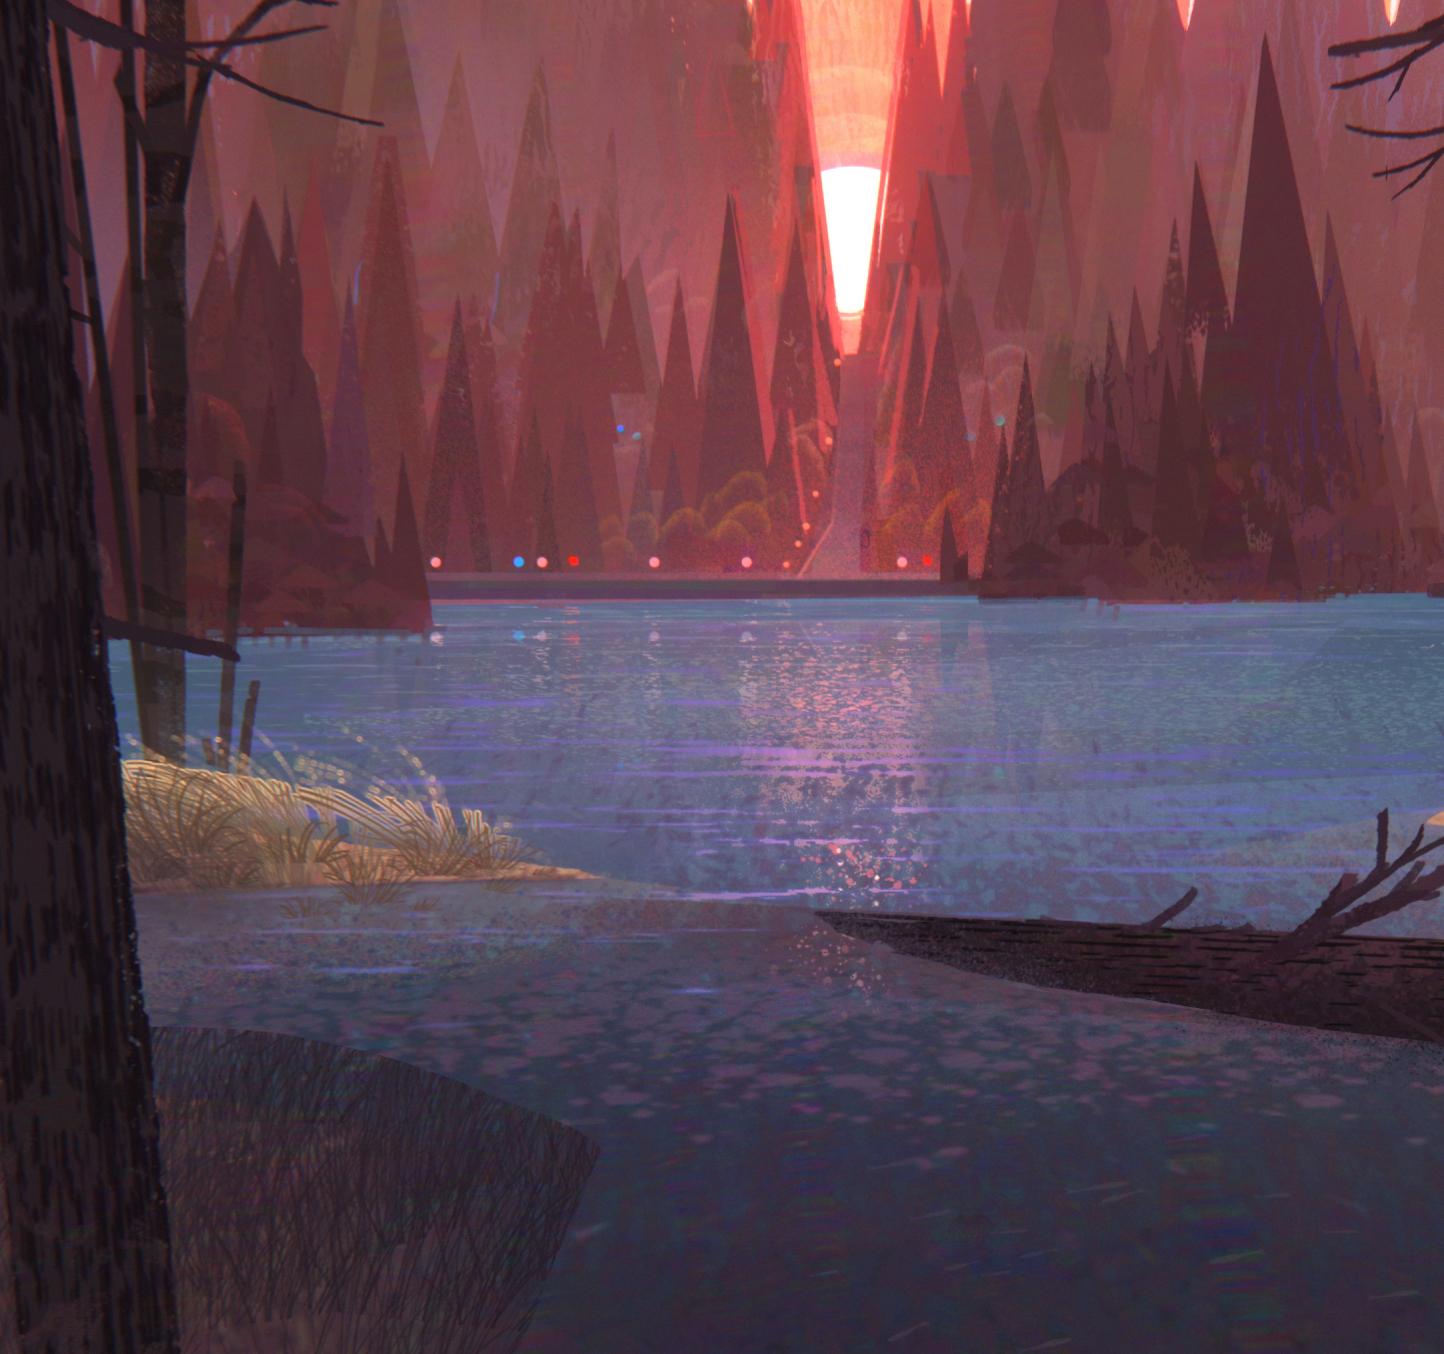  Jamie Williams Digital Creator 2D/3D Pinks Blues Trees Lake Magical Realism - Print by jamie williams